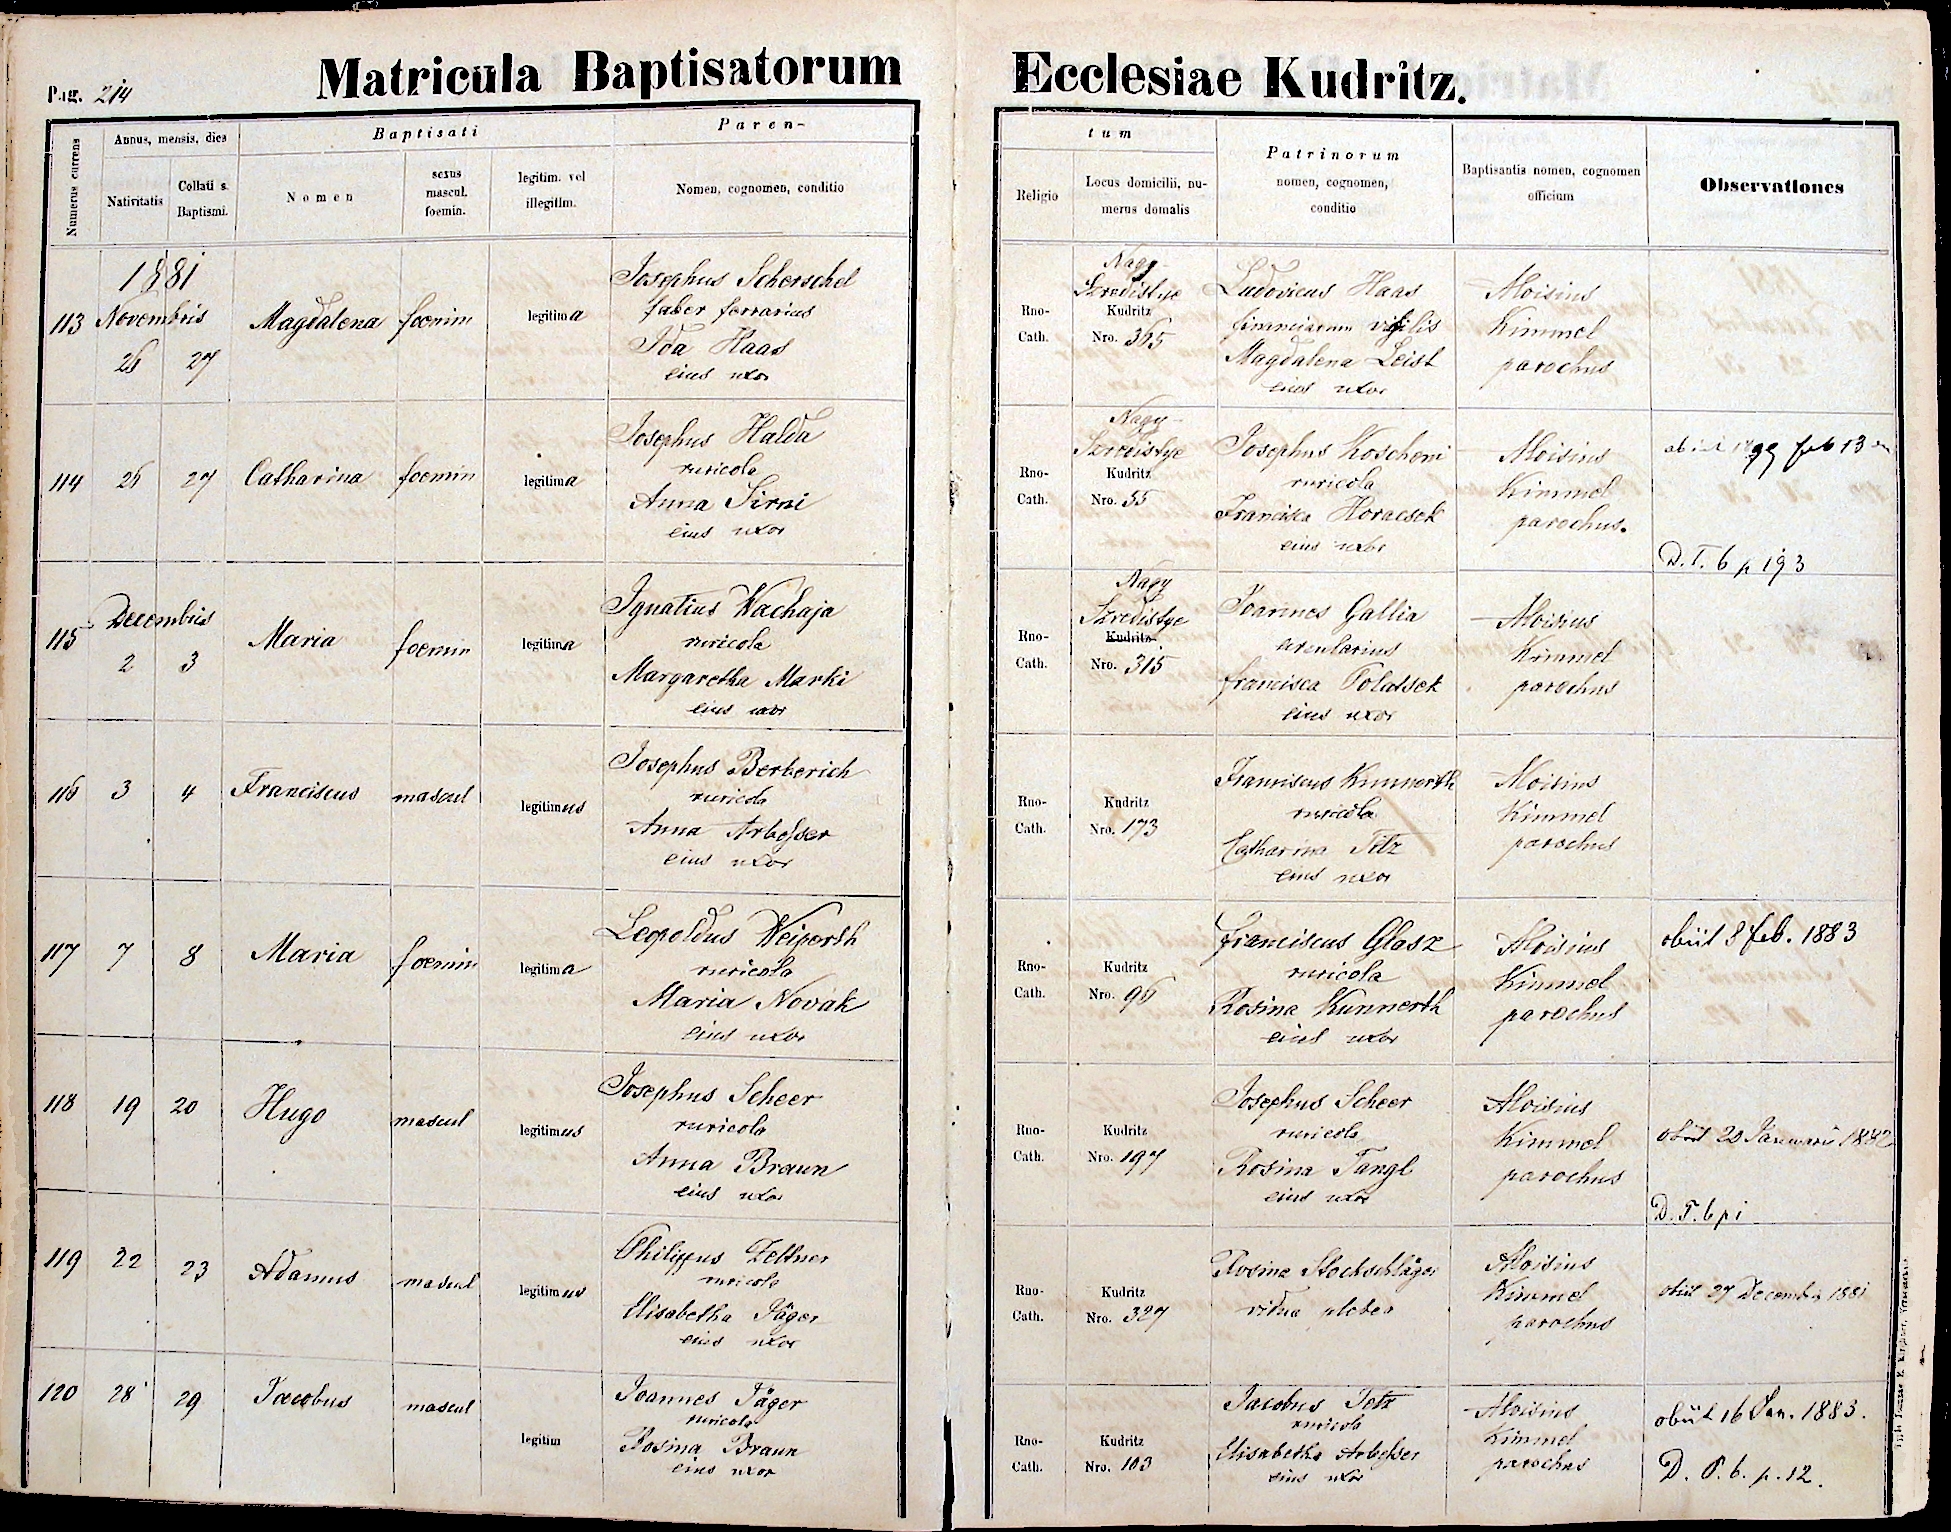 images/church_records/BIRTHS/1880-1883B/1881/214